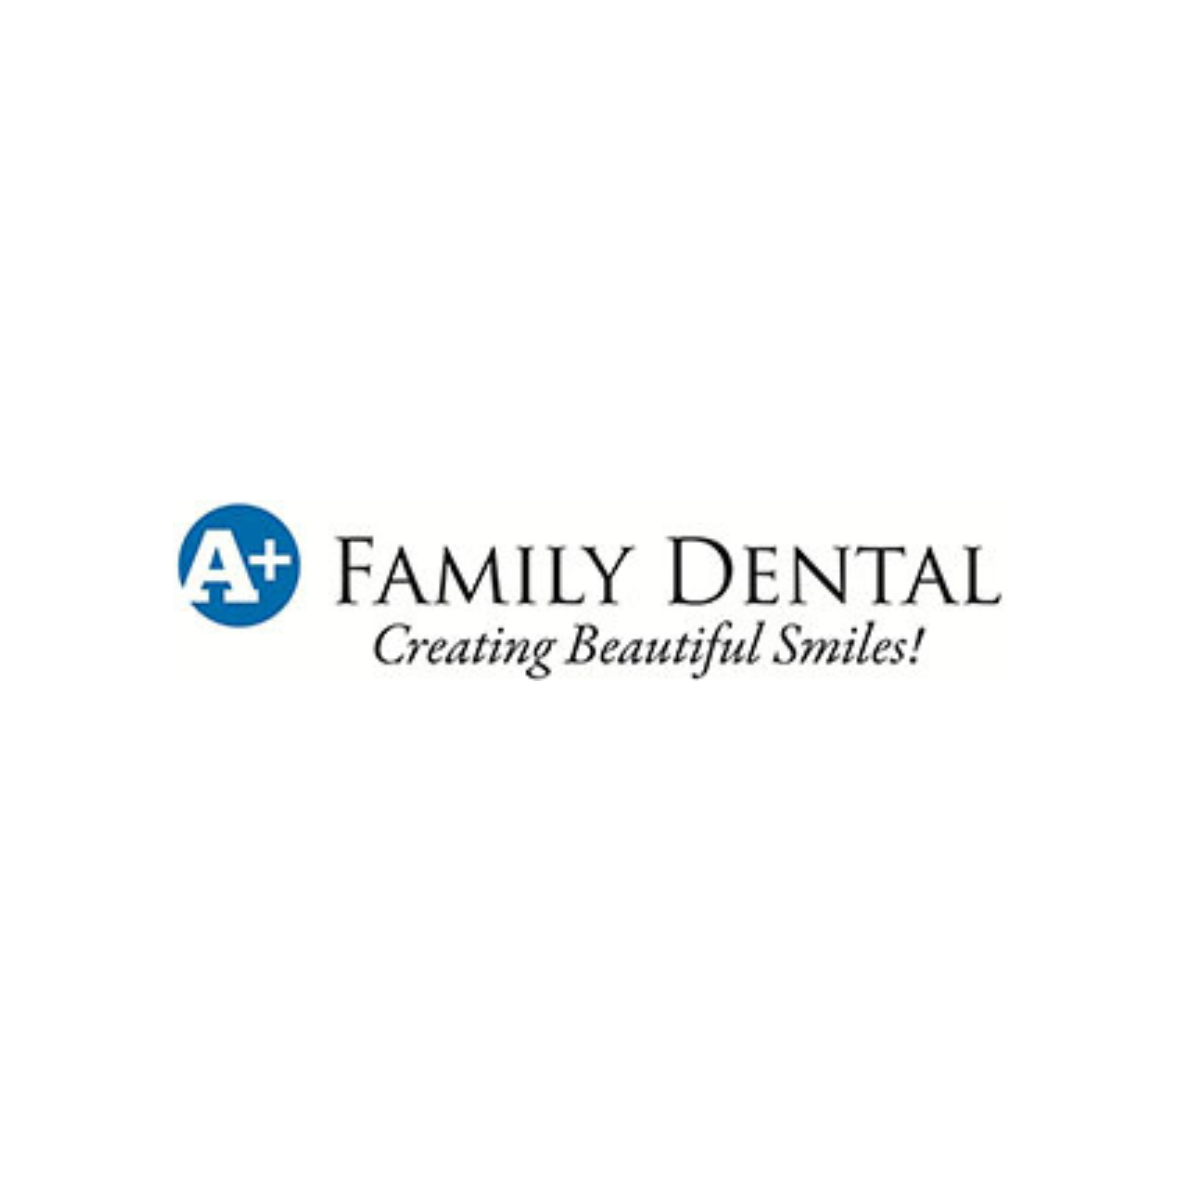 A+ Family Dental